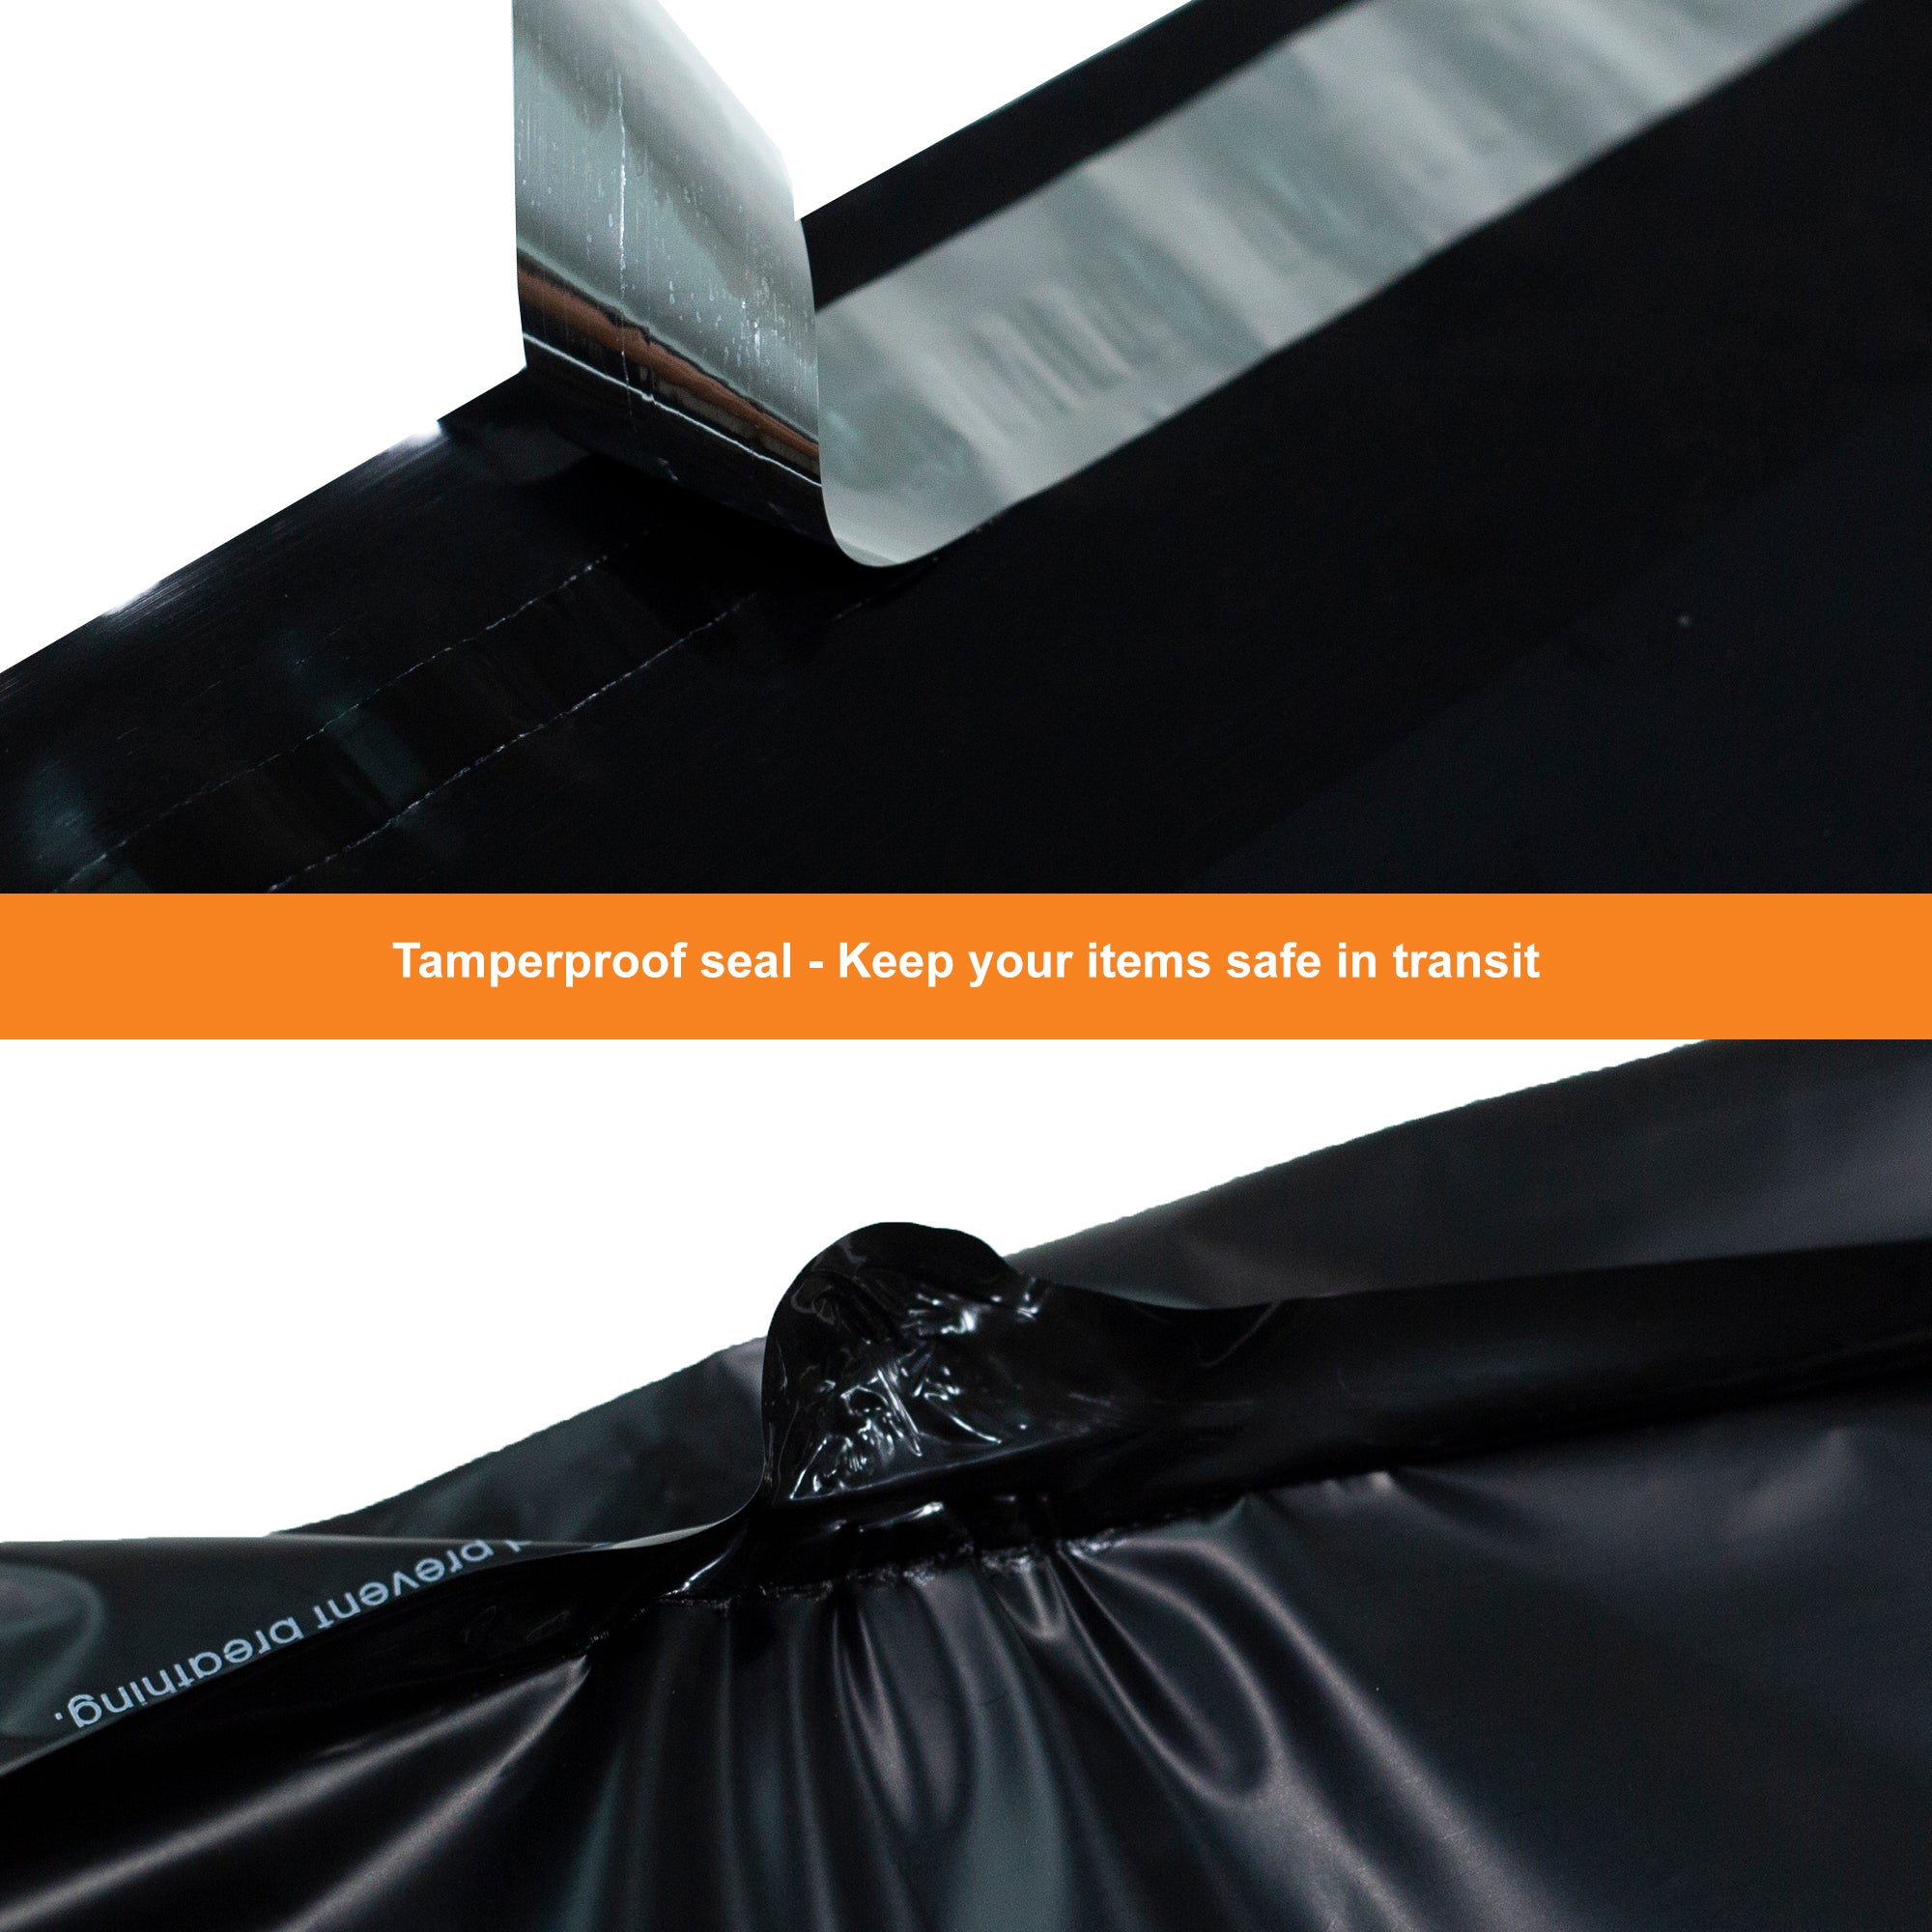 12 x 15.5 black thank you bag with tamperproof seal